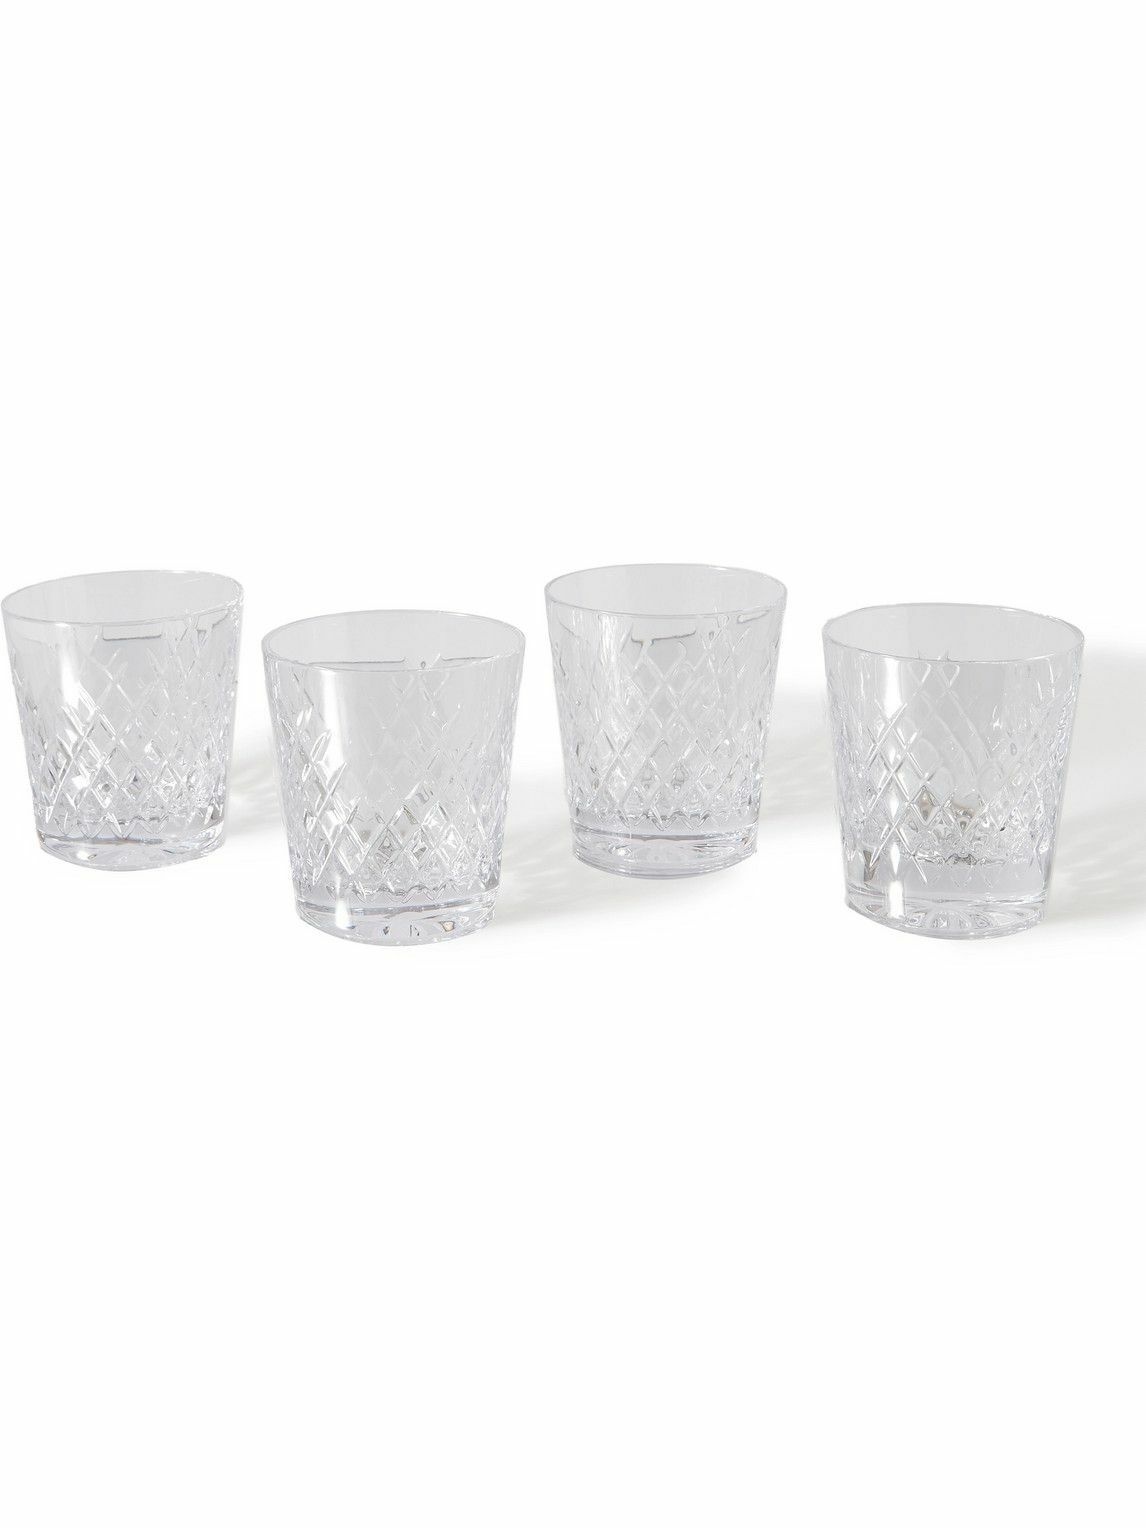 Barwell Set of Four Crystal Rocks Glasses